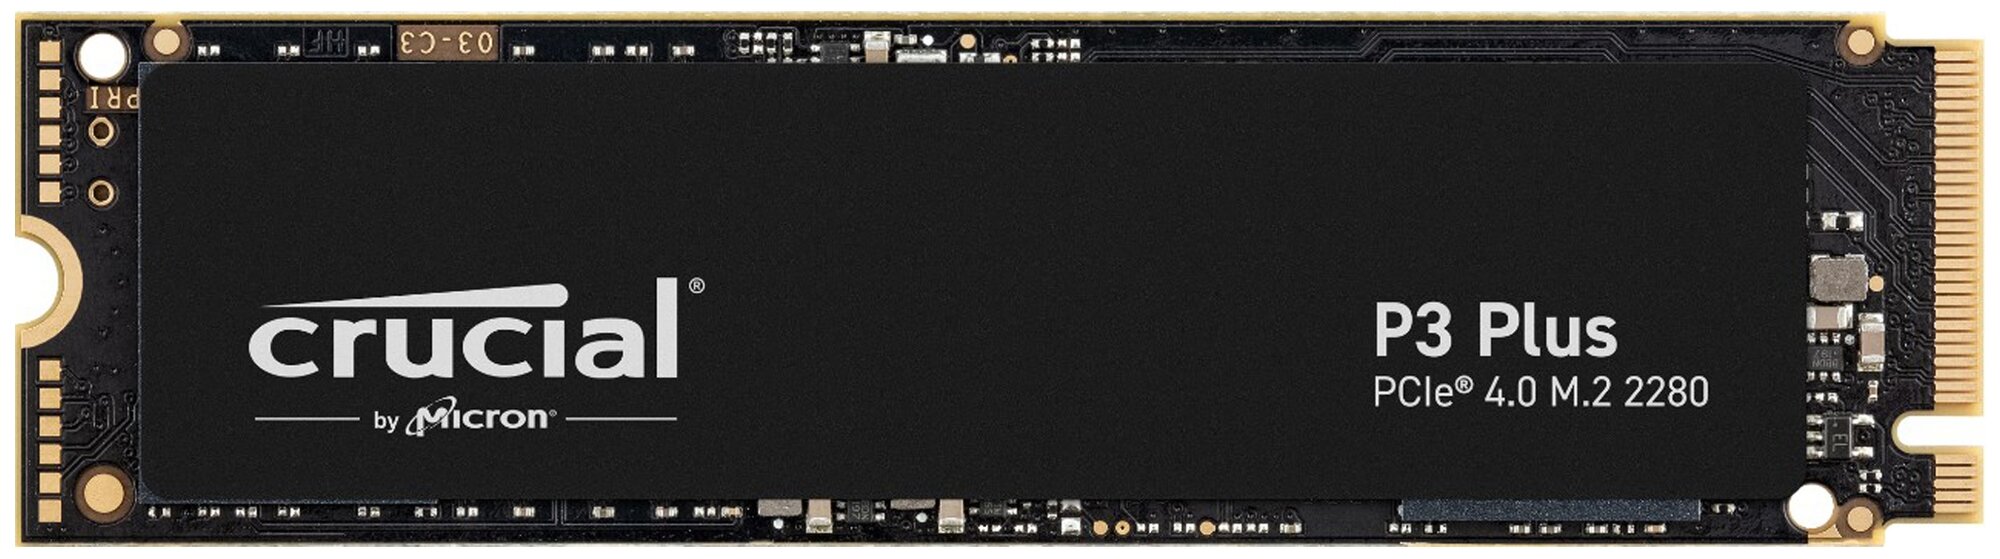 Твердотельный накопитель SSD Crucial P3 Plus 1TB PCIe M.2 2280 SSD NVMe (PCIe Gen 4 x4), 3D NAND, R/W 3600/5000MB/s, TBW 220, DWPD 0